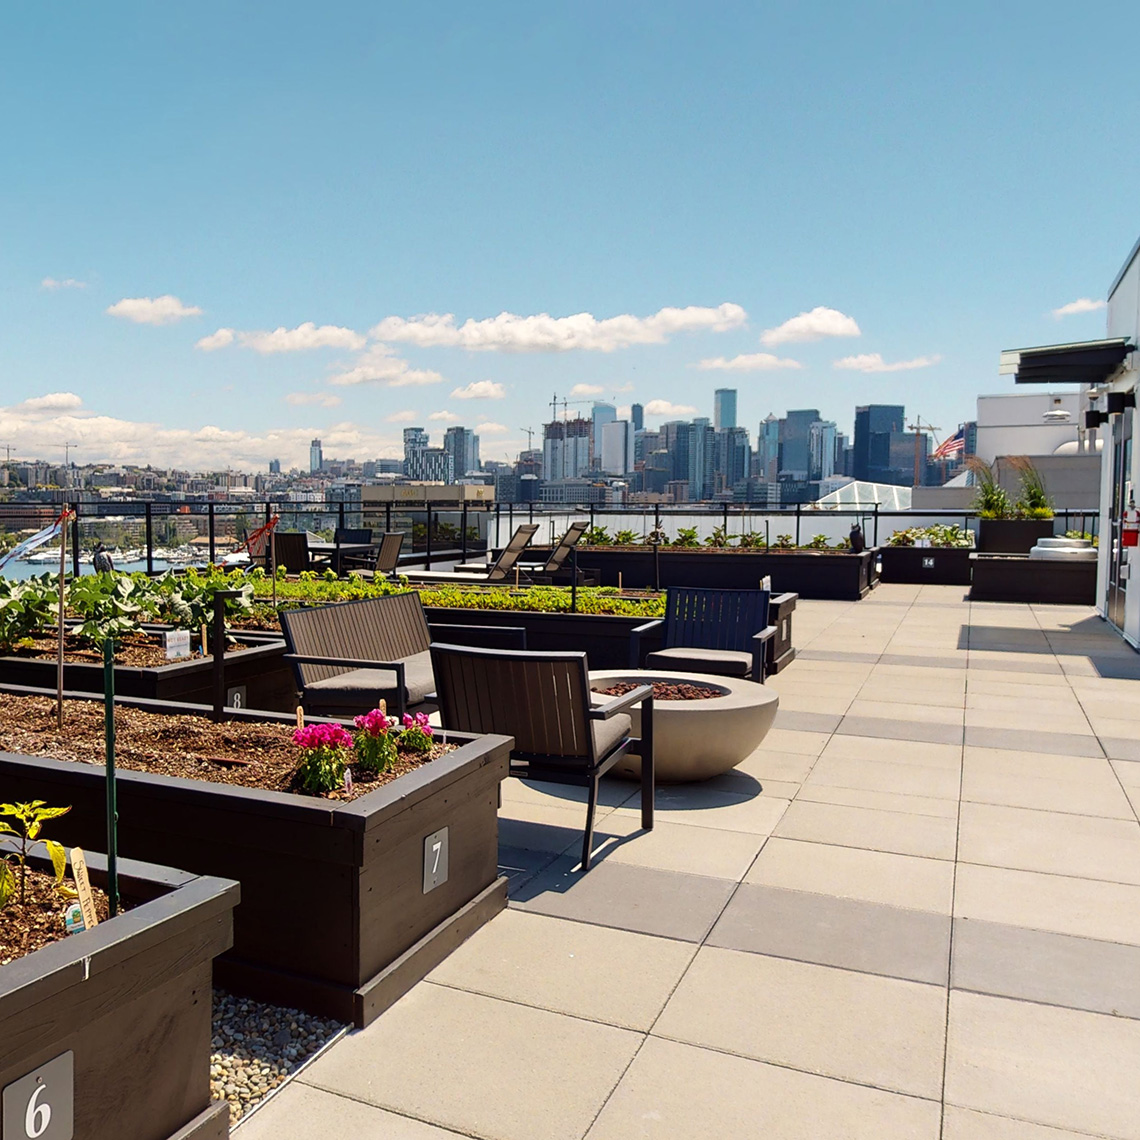 Stream Dexios Built Green 4-Star SLU apartment roof garden